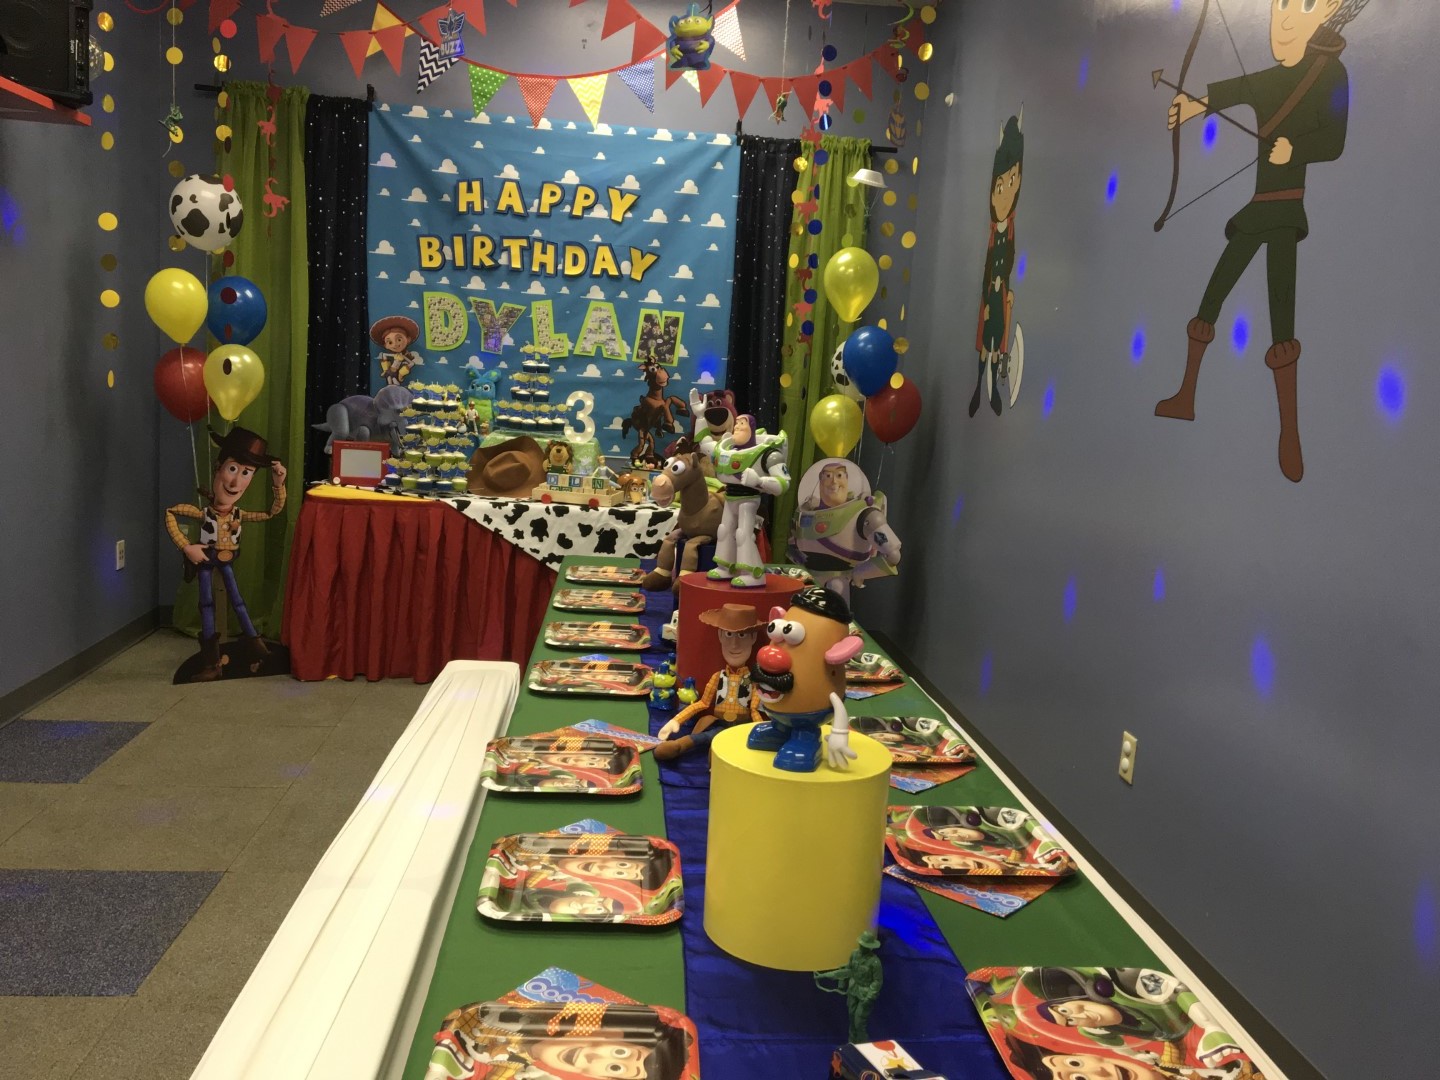 Toy Story Theme 3 Year Old Birthday Party Orlando Fl Princesses Princes